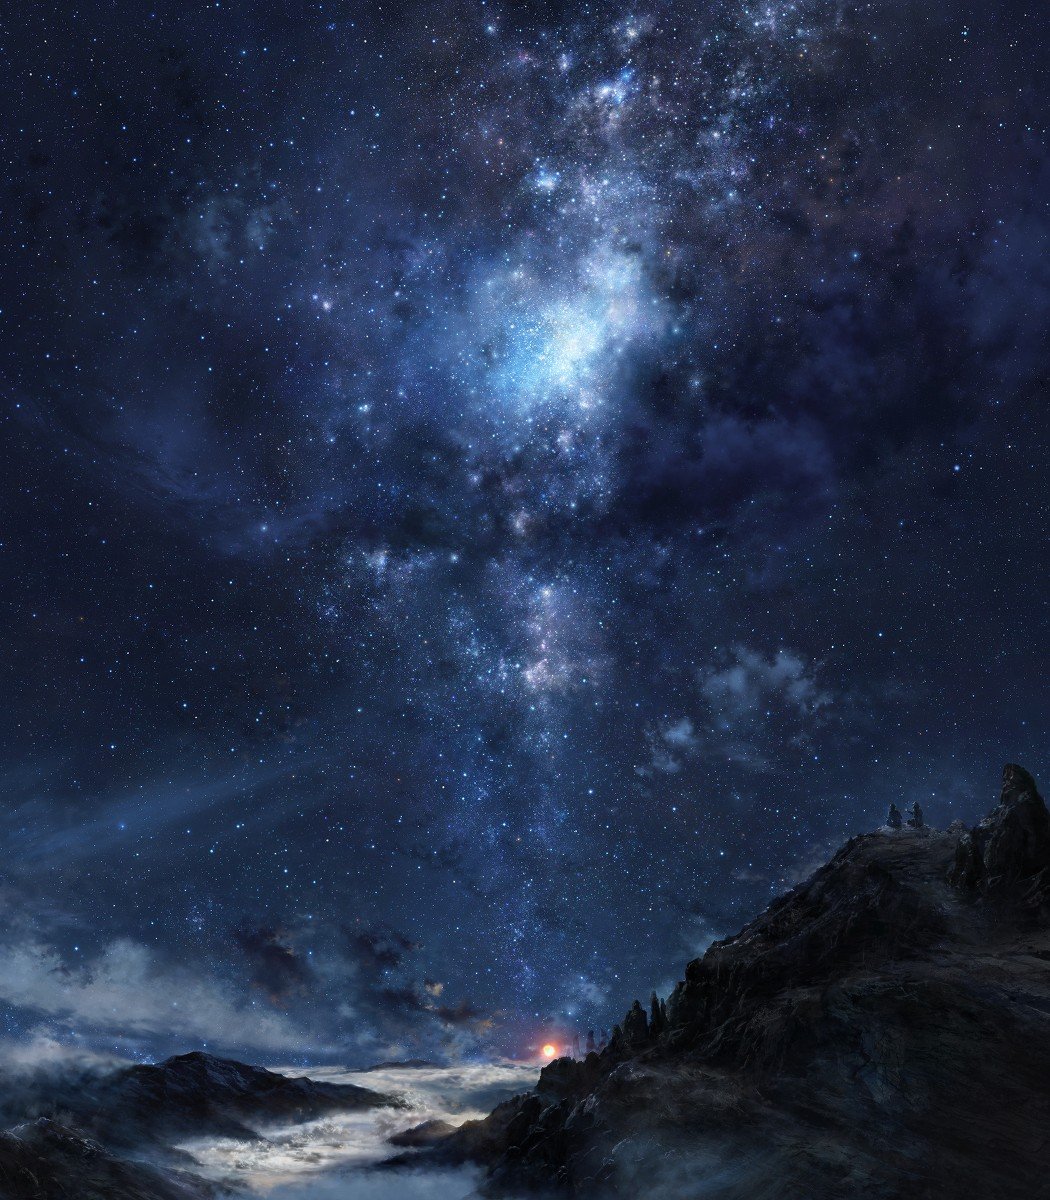 Night Sky With Galaxy